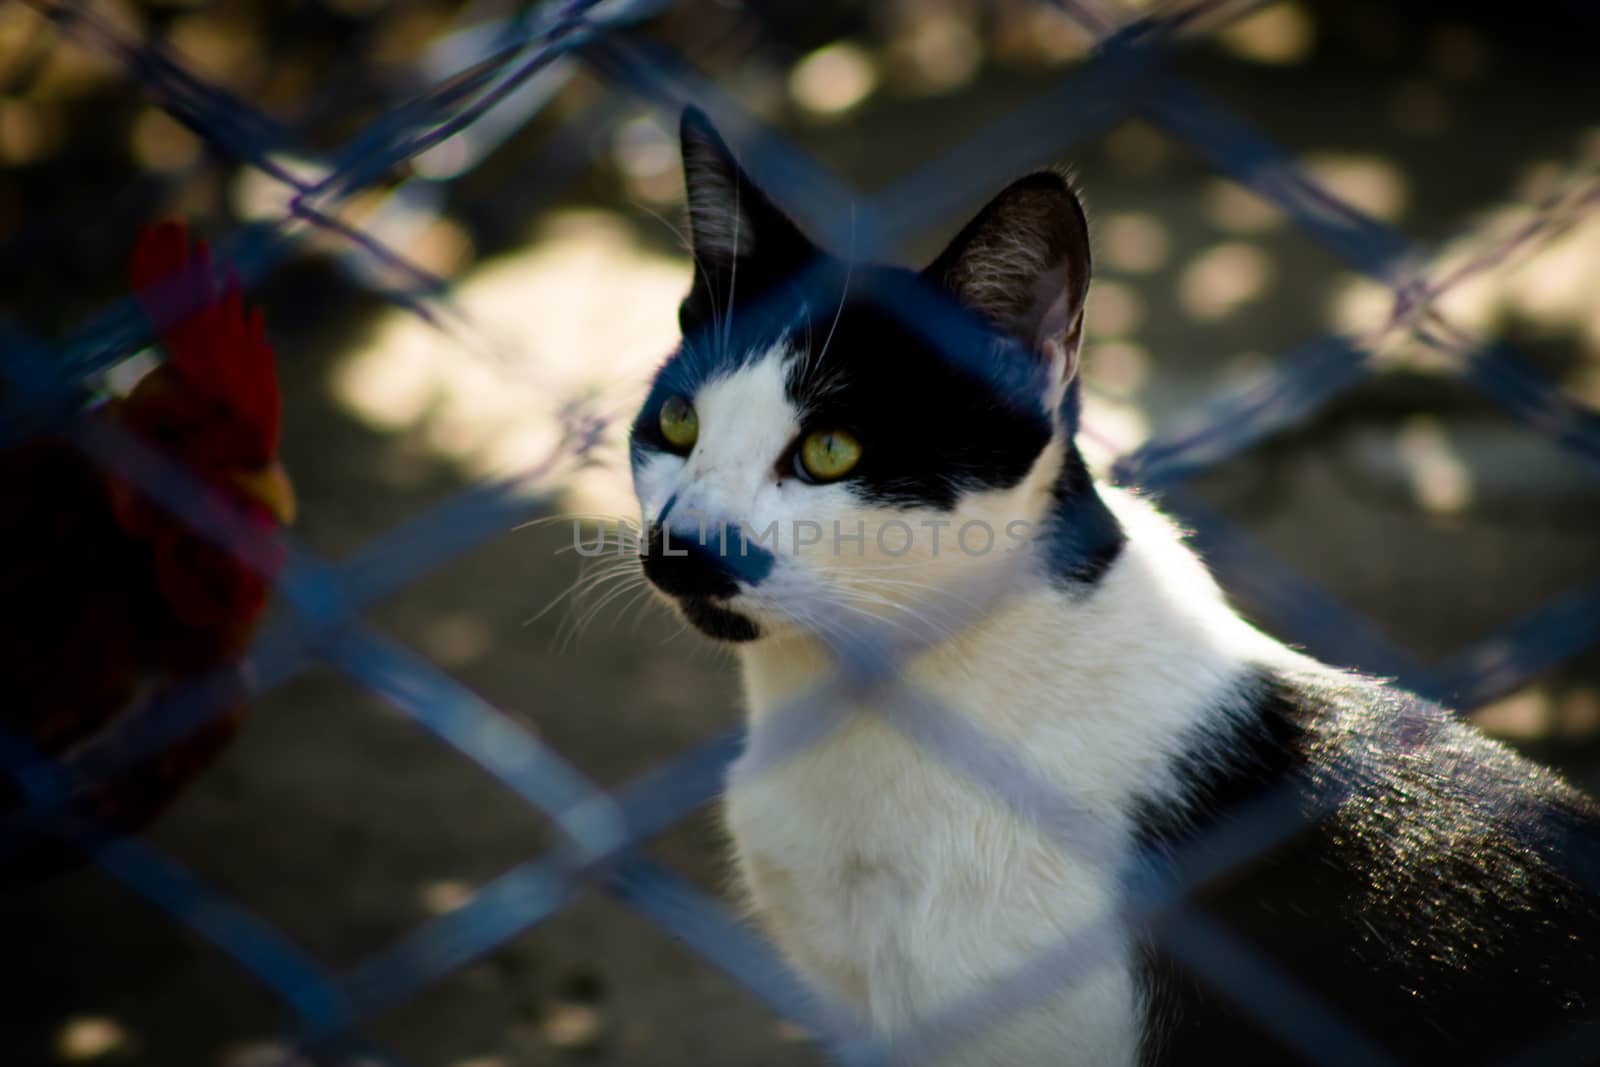 Cat though fence by gigiobbr